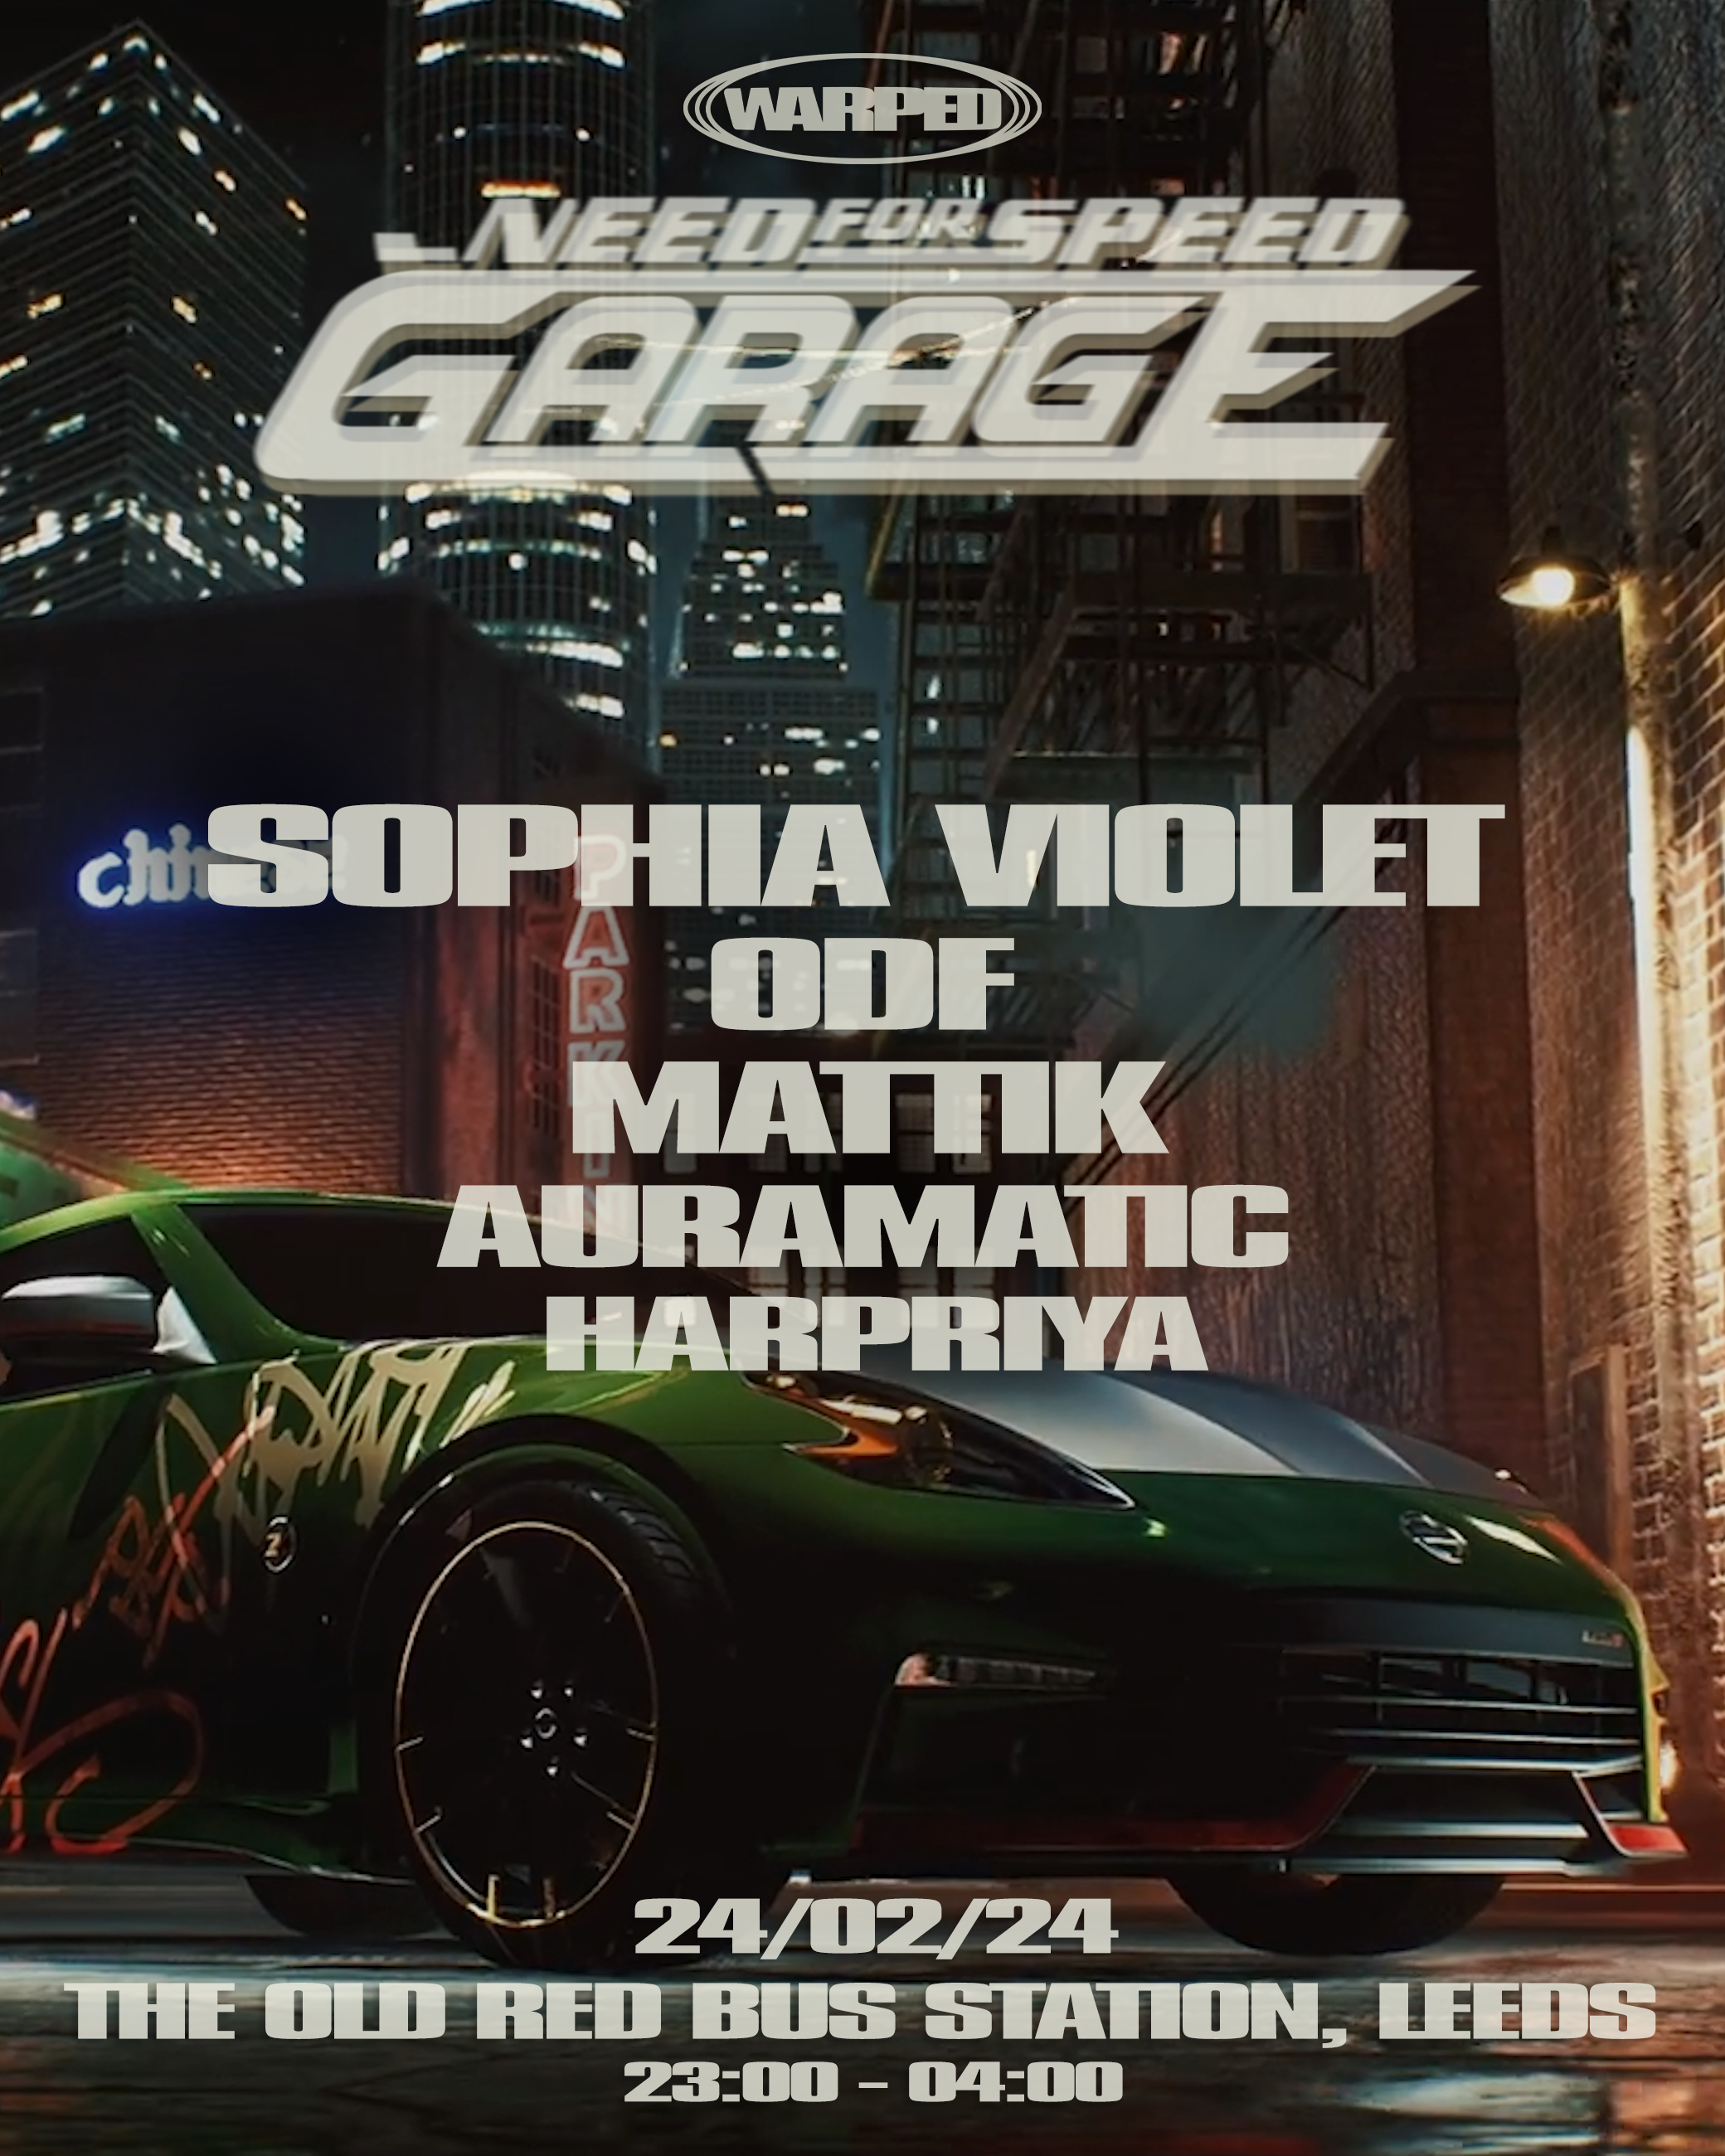 Need For Speed Garage - Sophia Violet, ODF, Mattik, Auramatic + more - フライヤー表